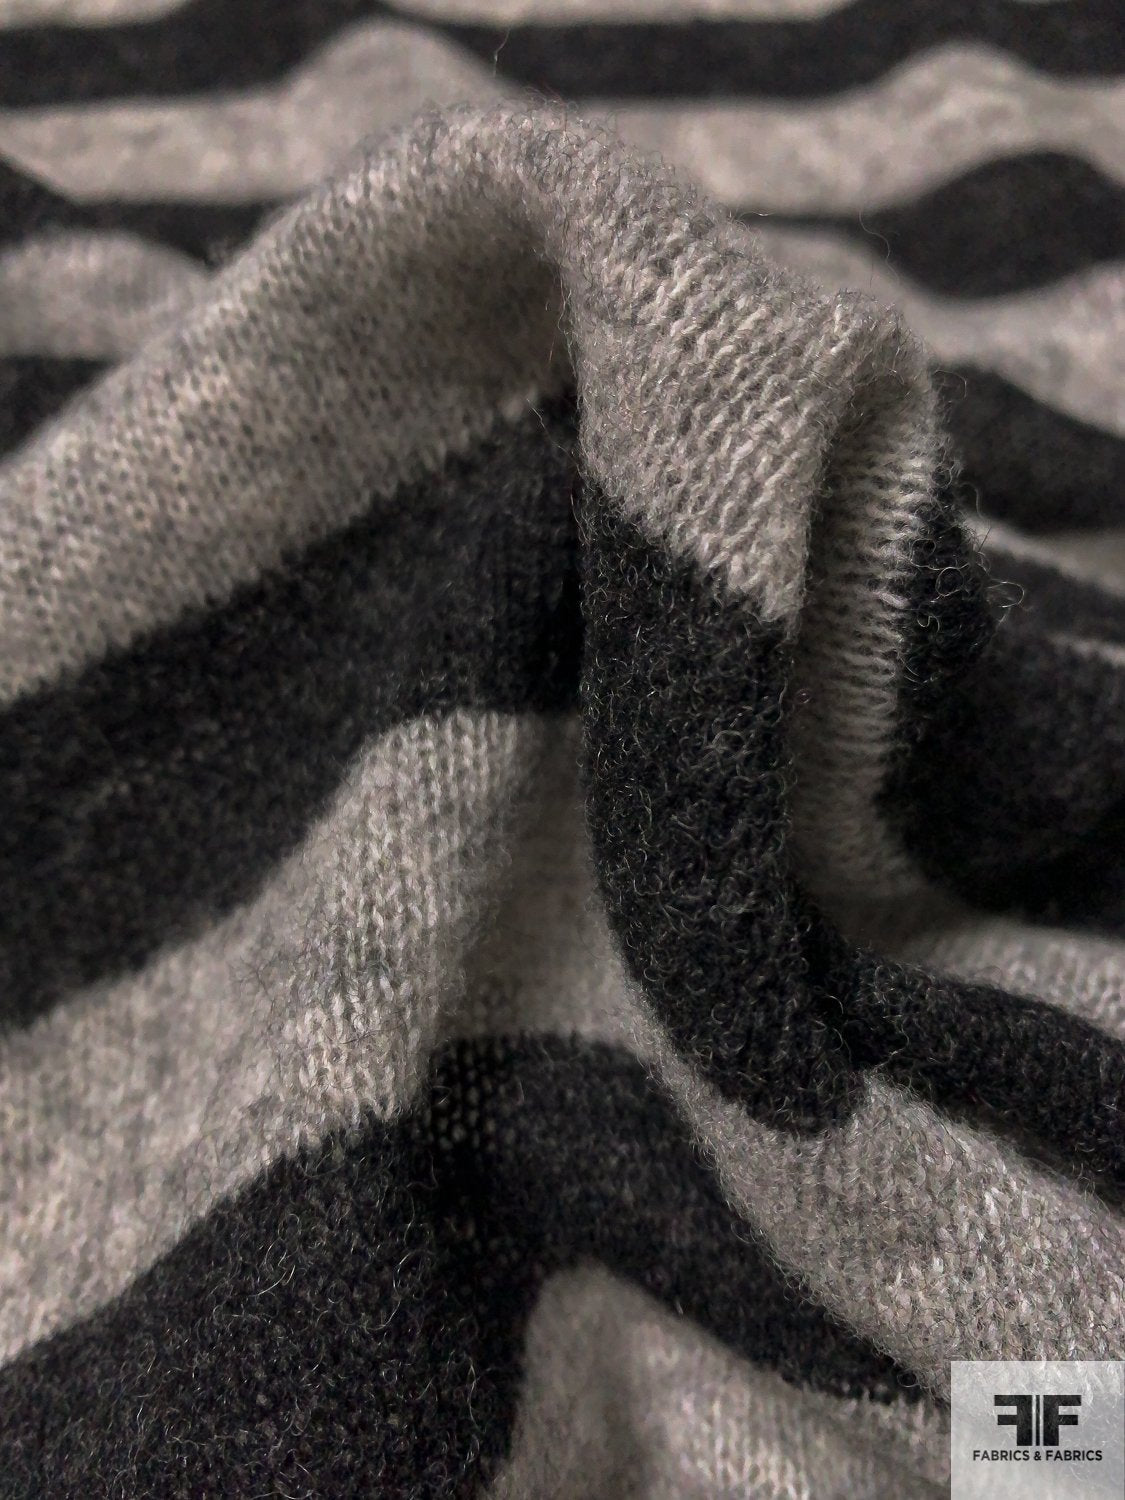 Italian Horizontal Striped Lightweight Wool Sweater Knit - Heather Black / Heather Grey